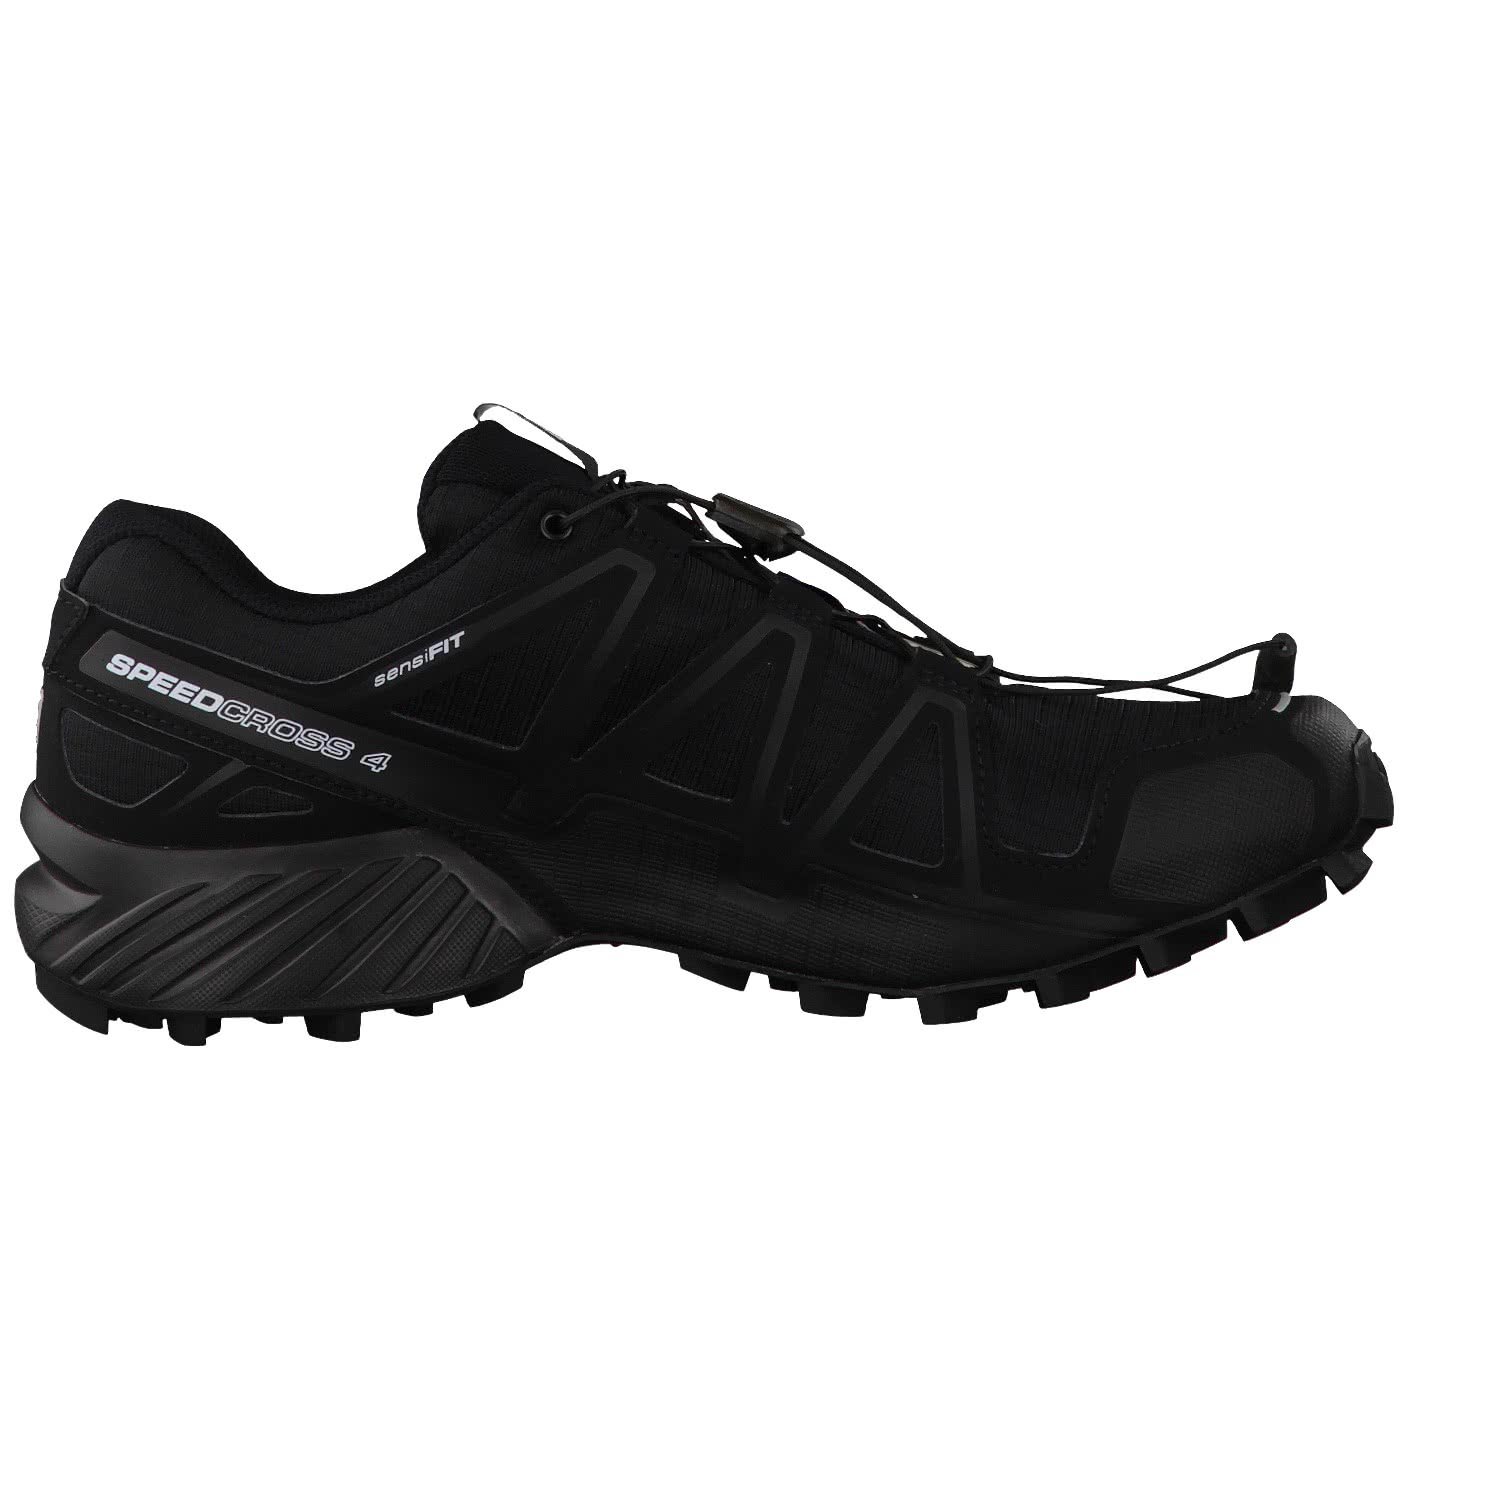 Salomon Men's Speedcross 4 Trail Running Shoes